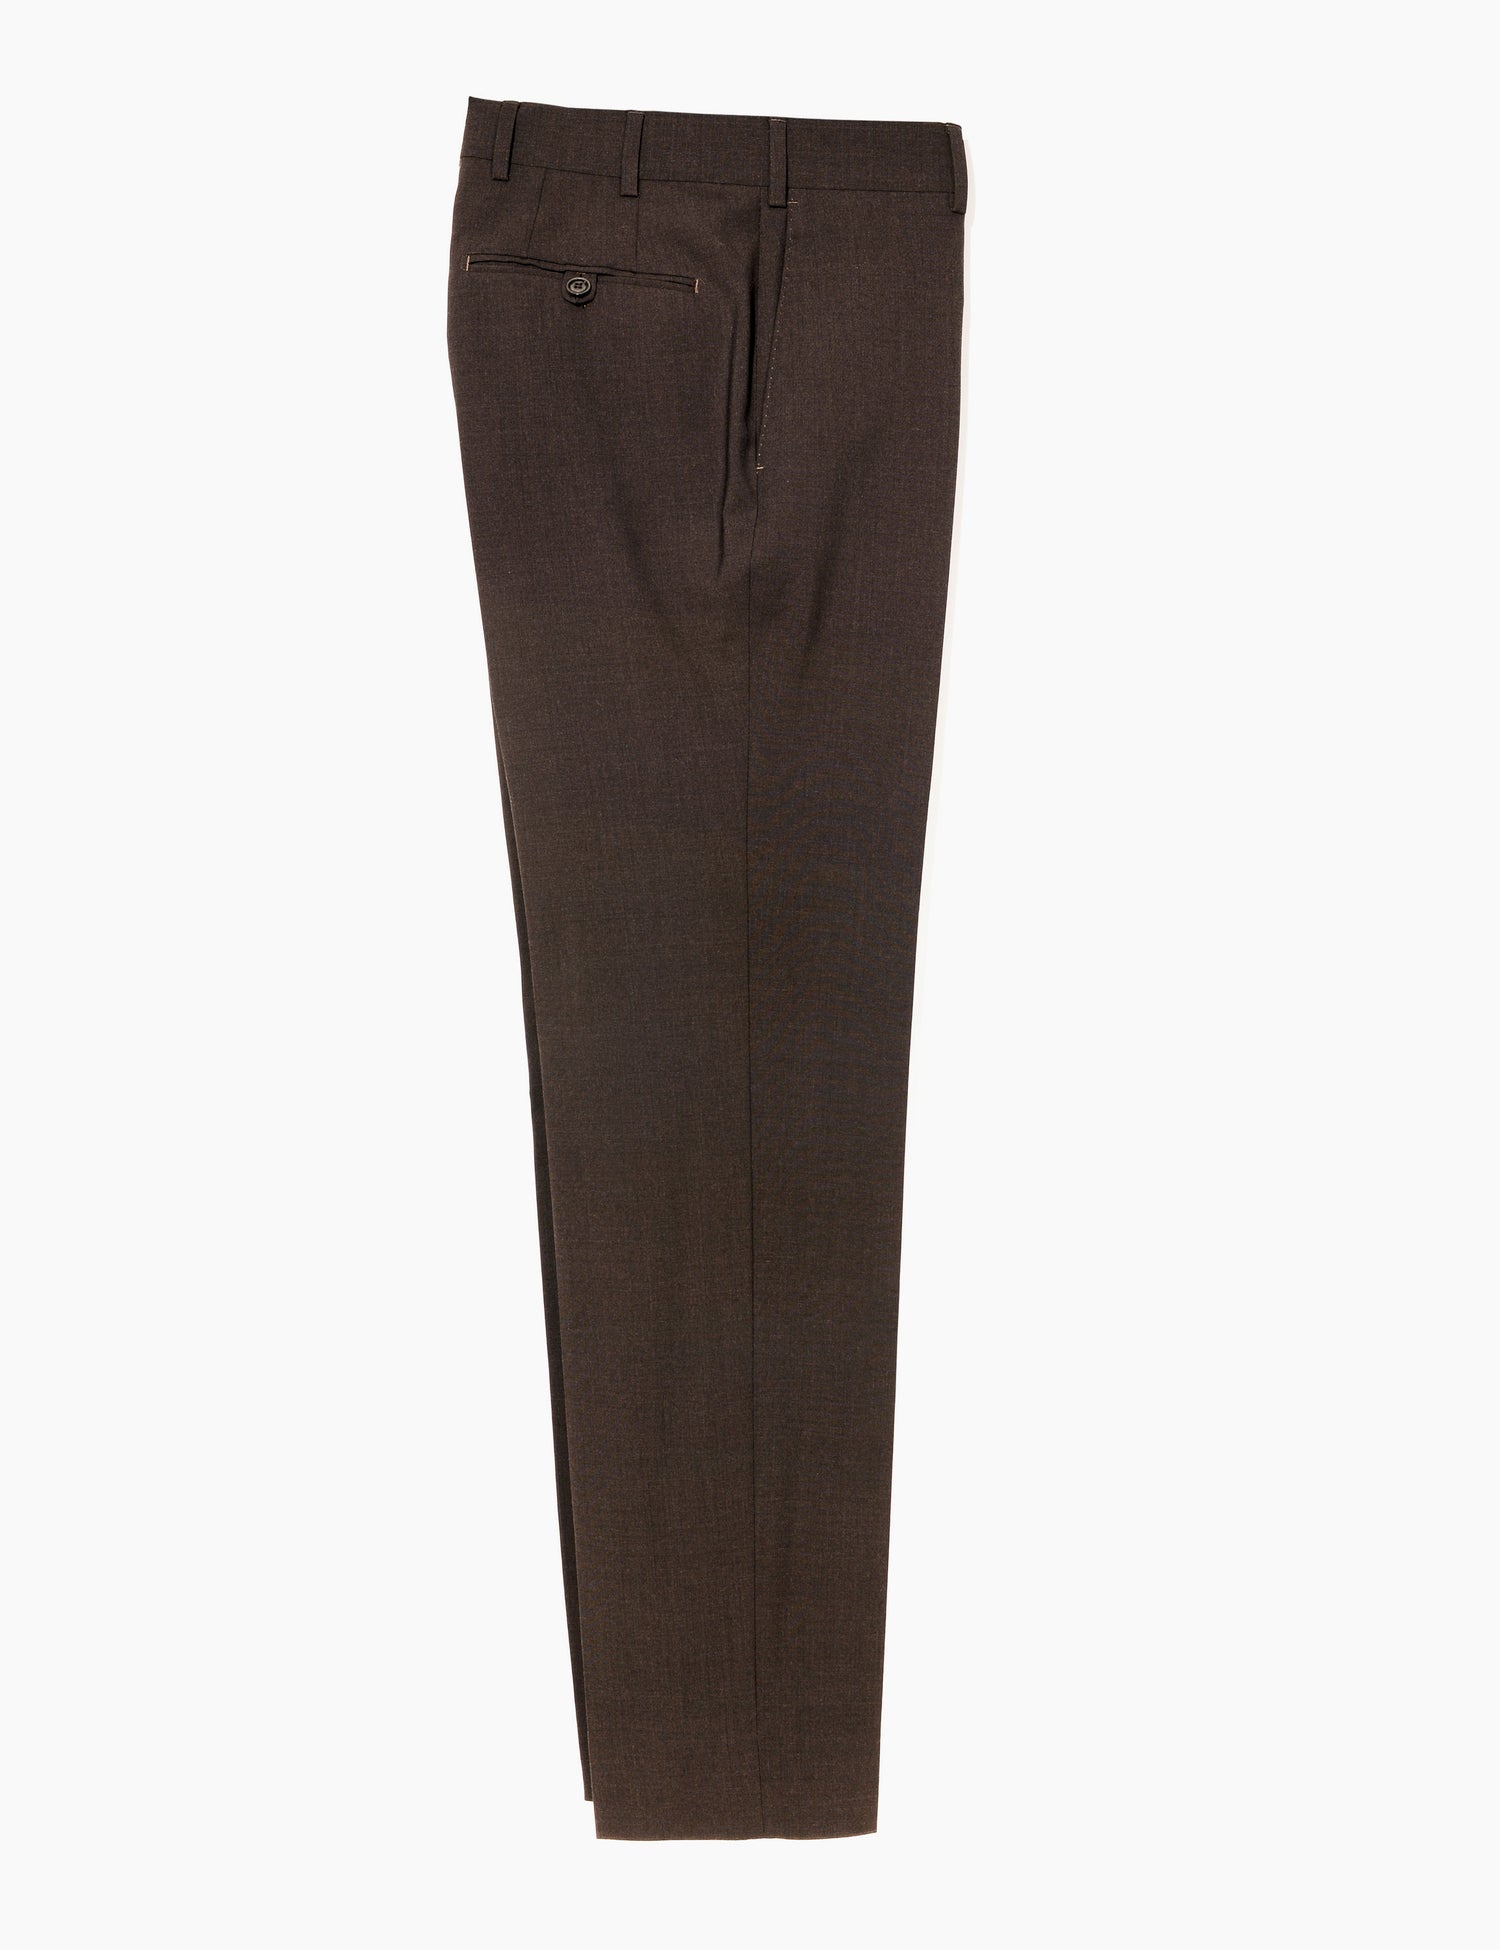 Brooklyn Tailors BKT50 Tailored Trousers in Heathered Plainweave - Charred Ember full length flat shot